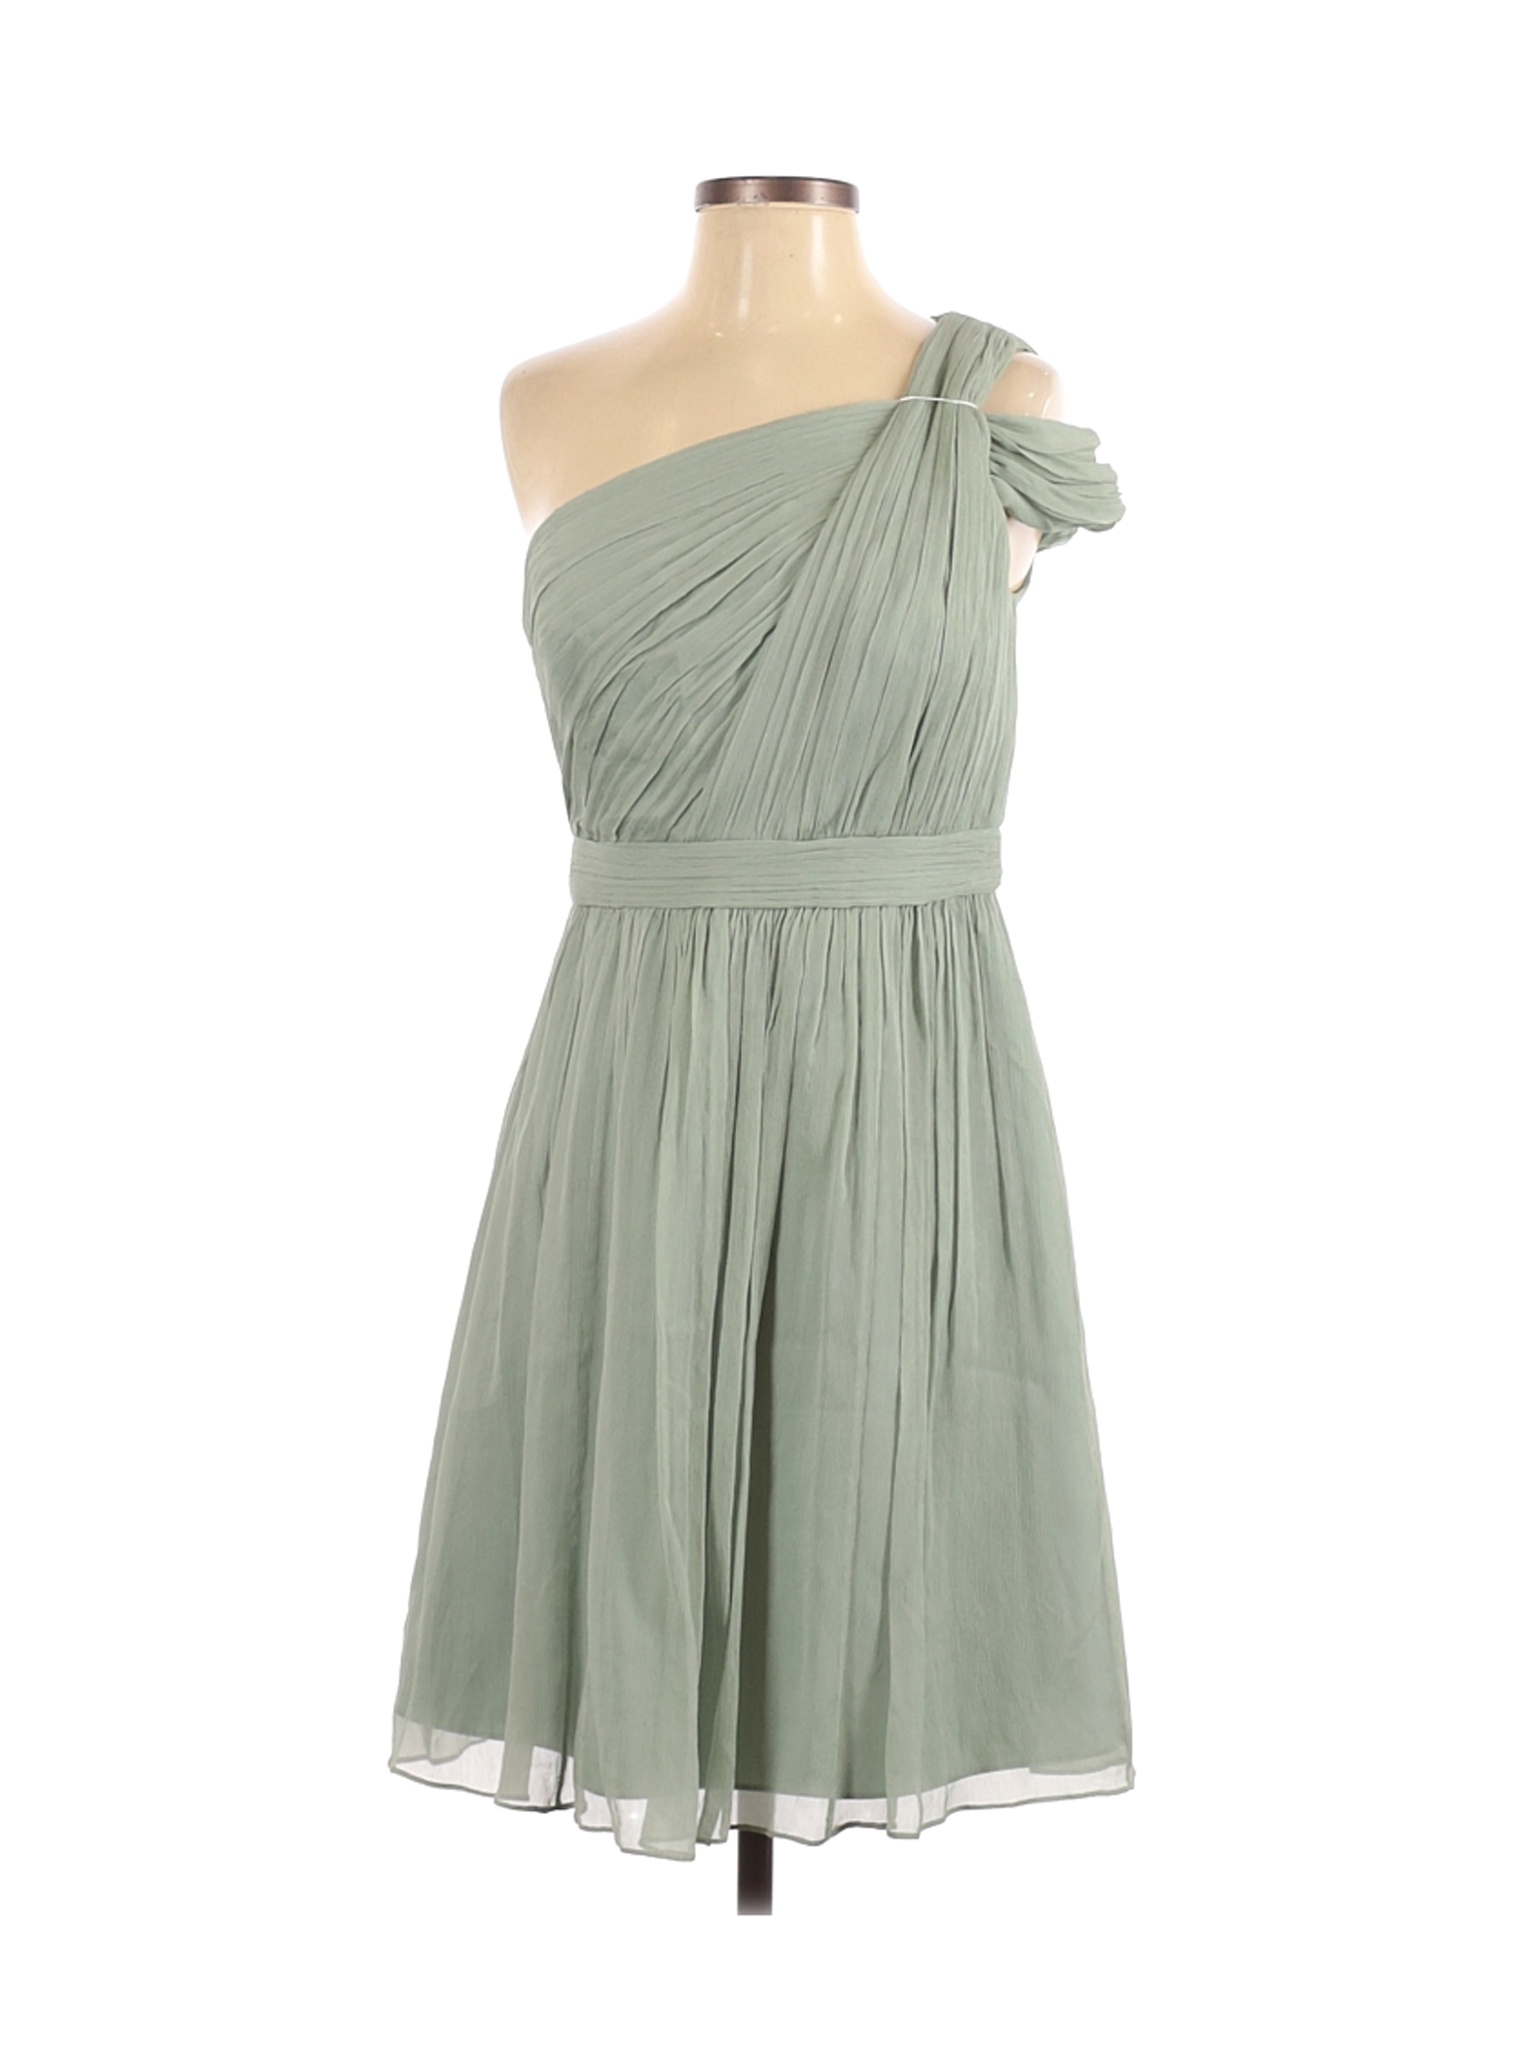 NWT J.Crew Women Green Cocktail Dress 4 | eBay